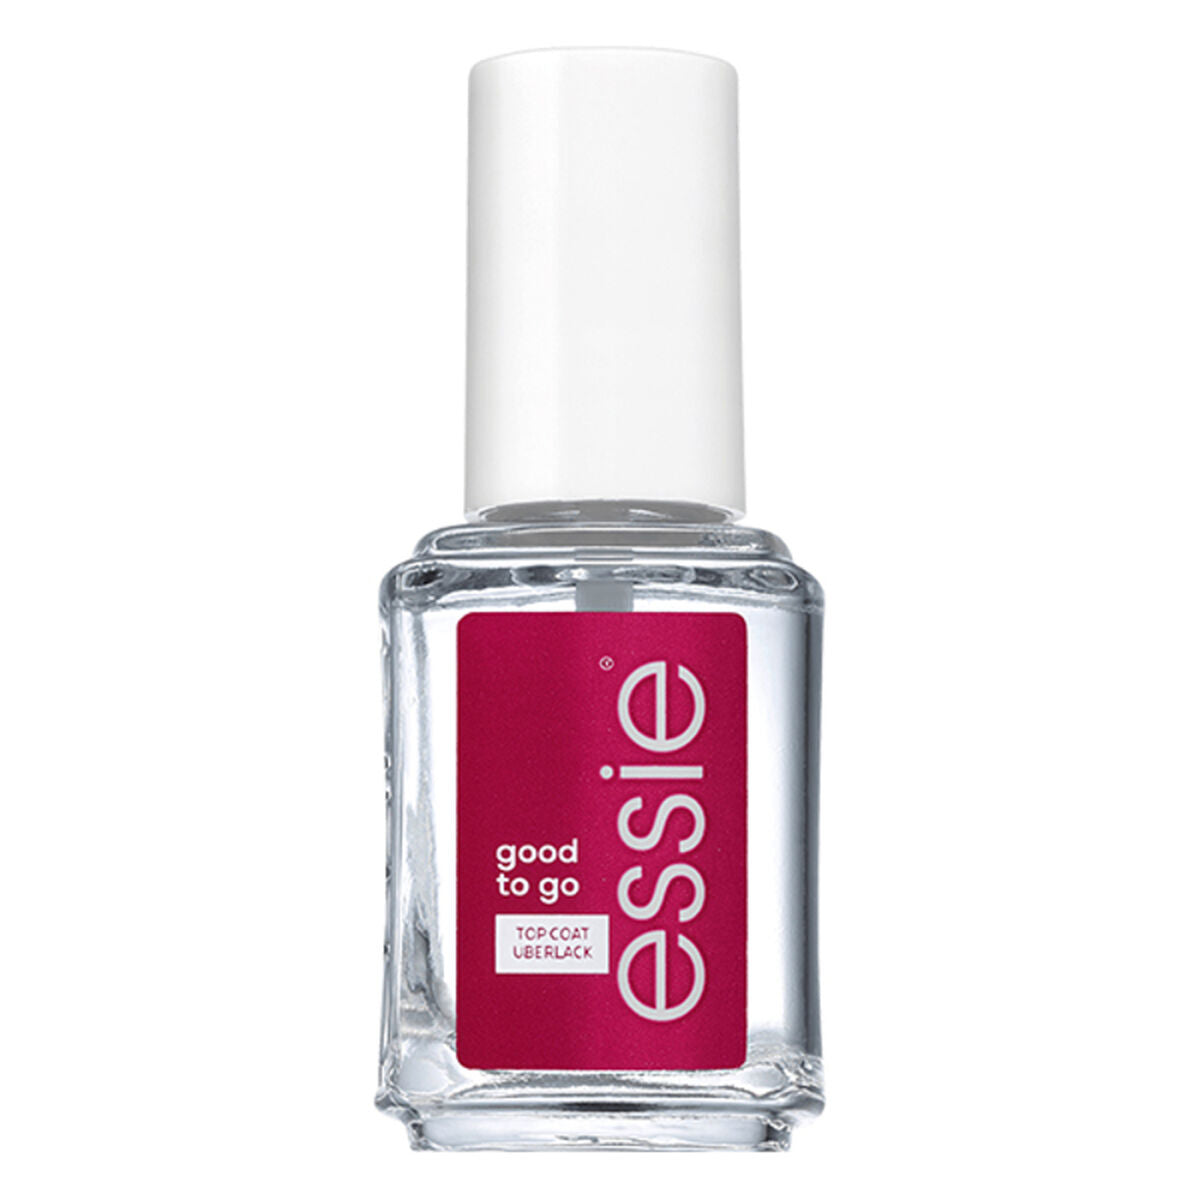 Nail polish GOOD TO GO dry&shine Essie (13,5 ml) - Calm Beauty IE